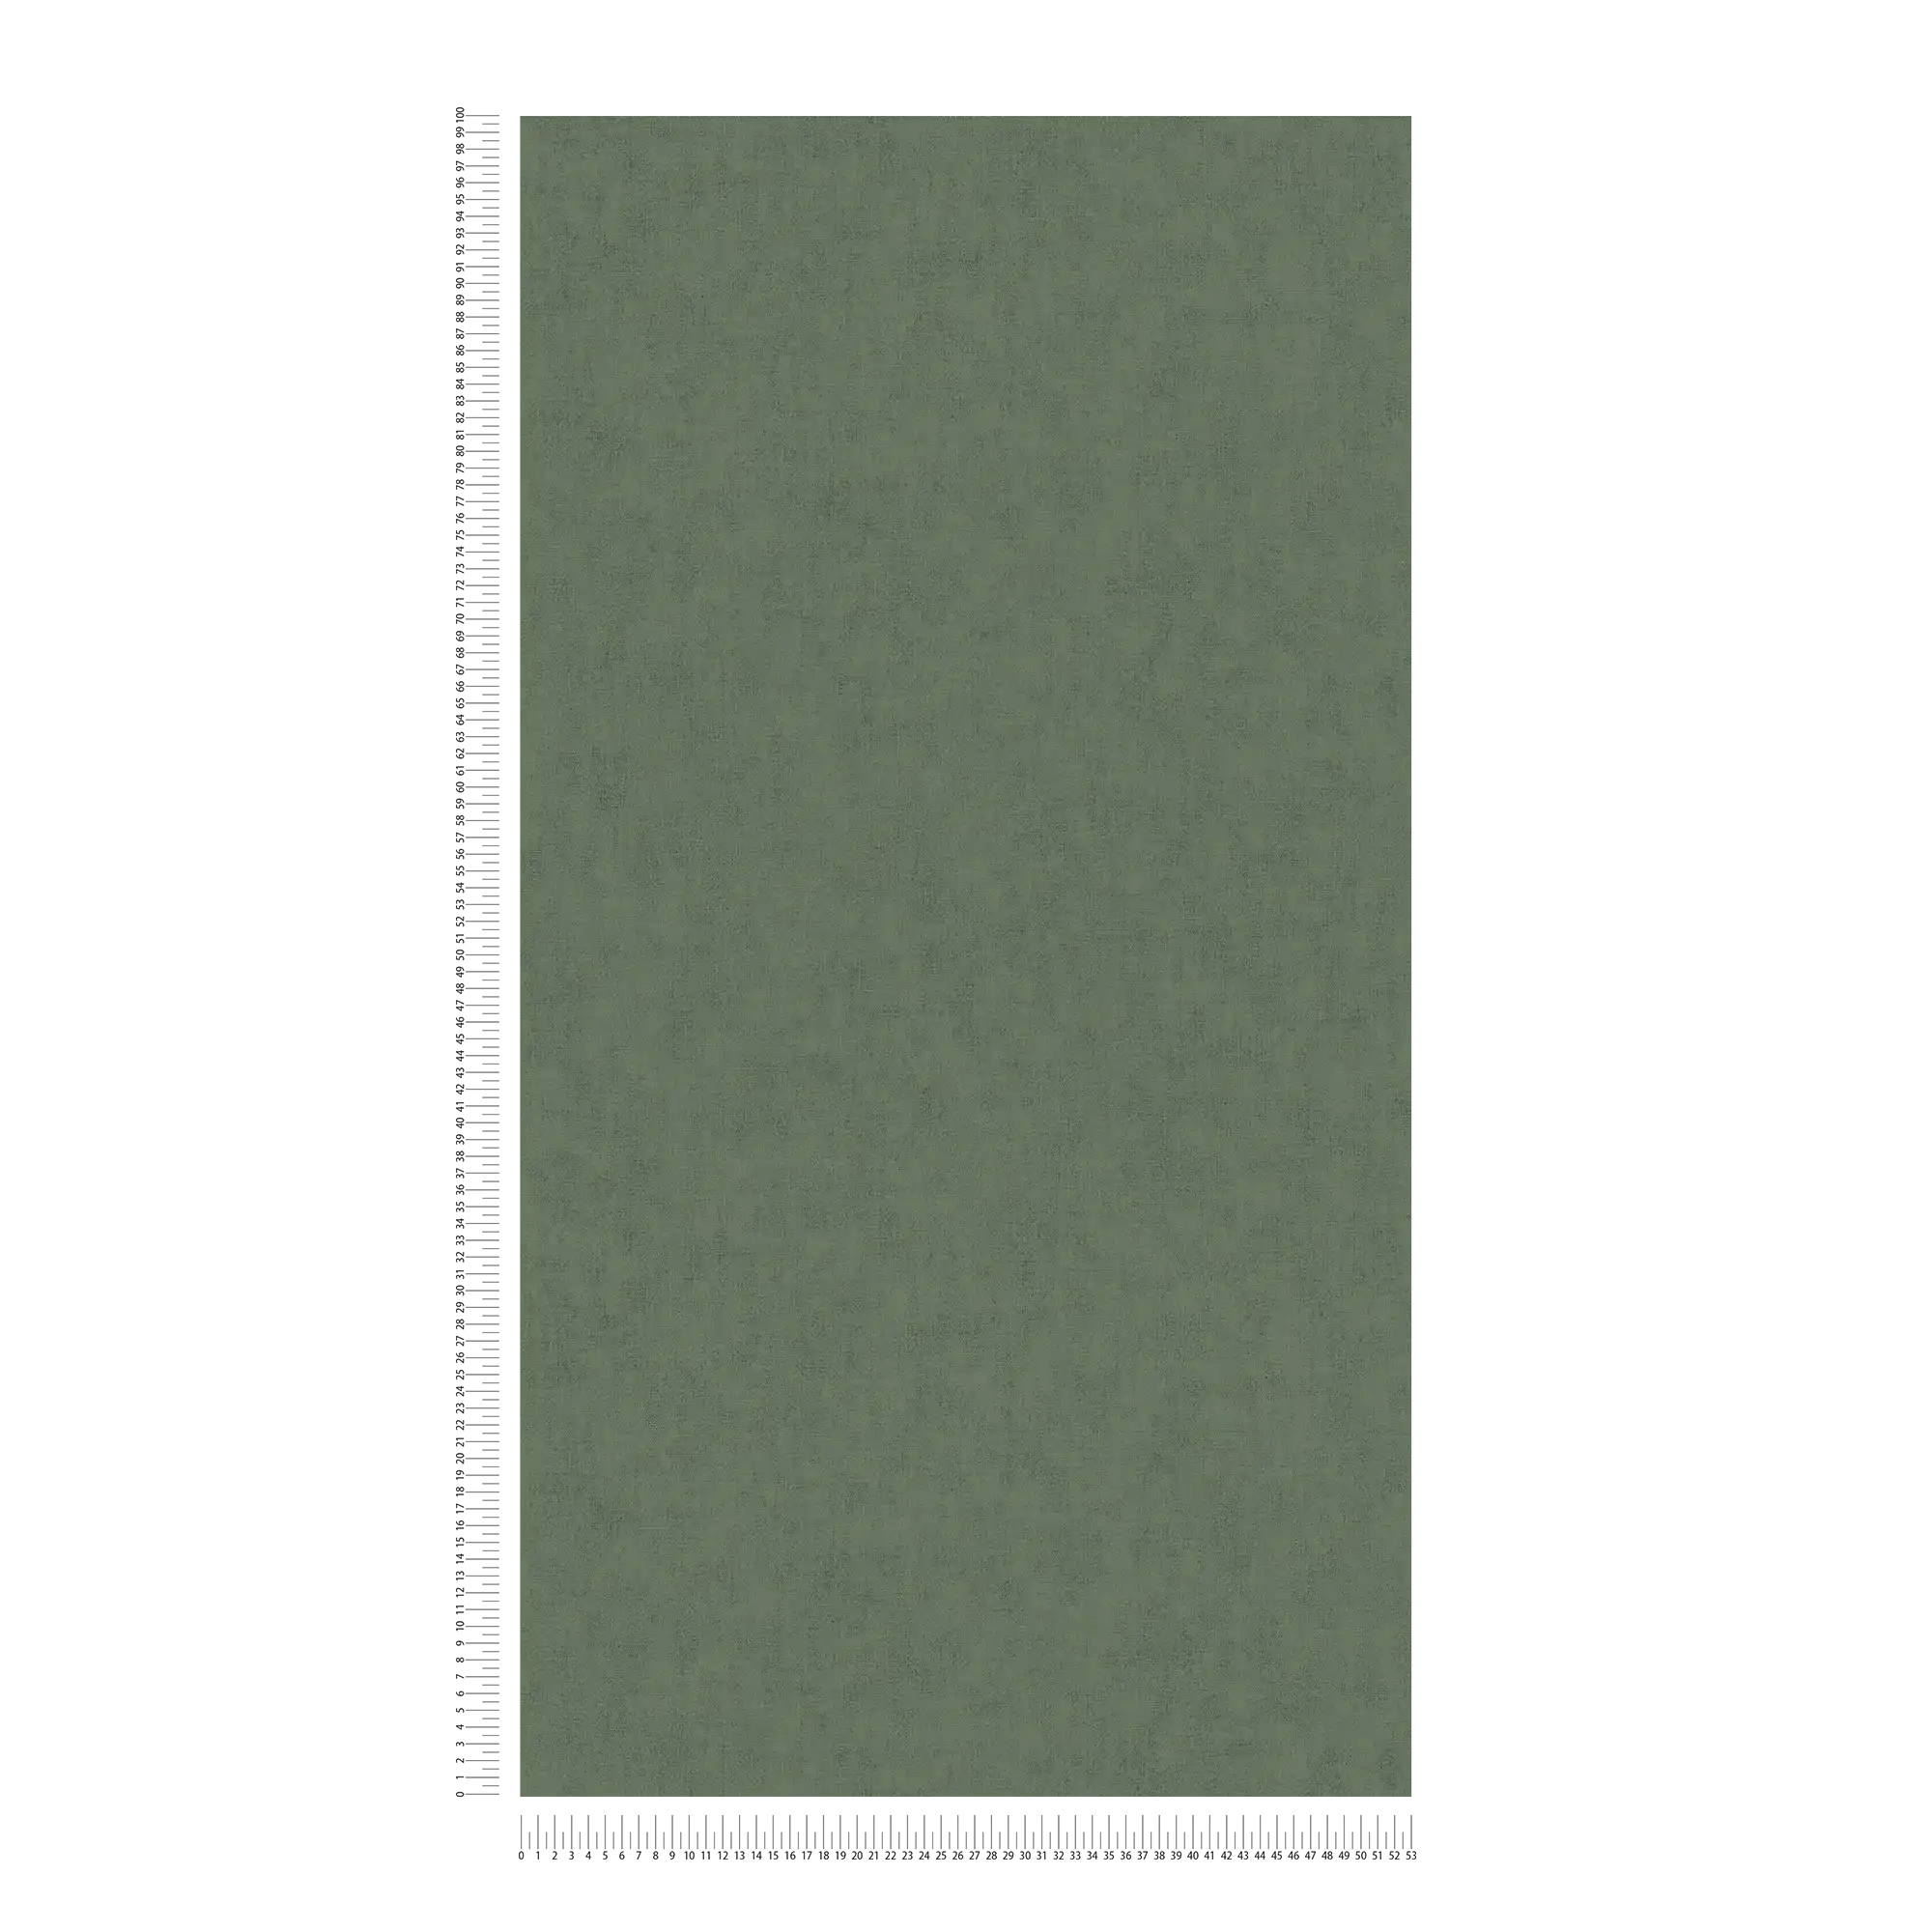             Vliestapete Textil-Optik im Scandinavian Stil - Grau, Braun
        